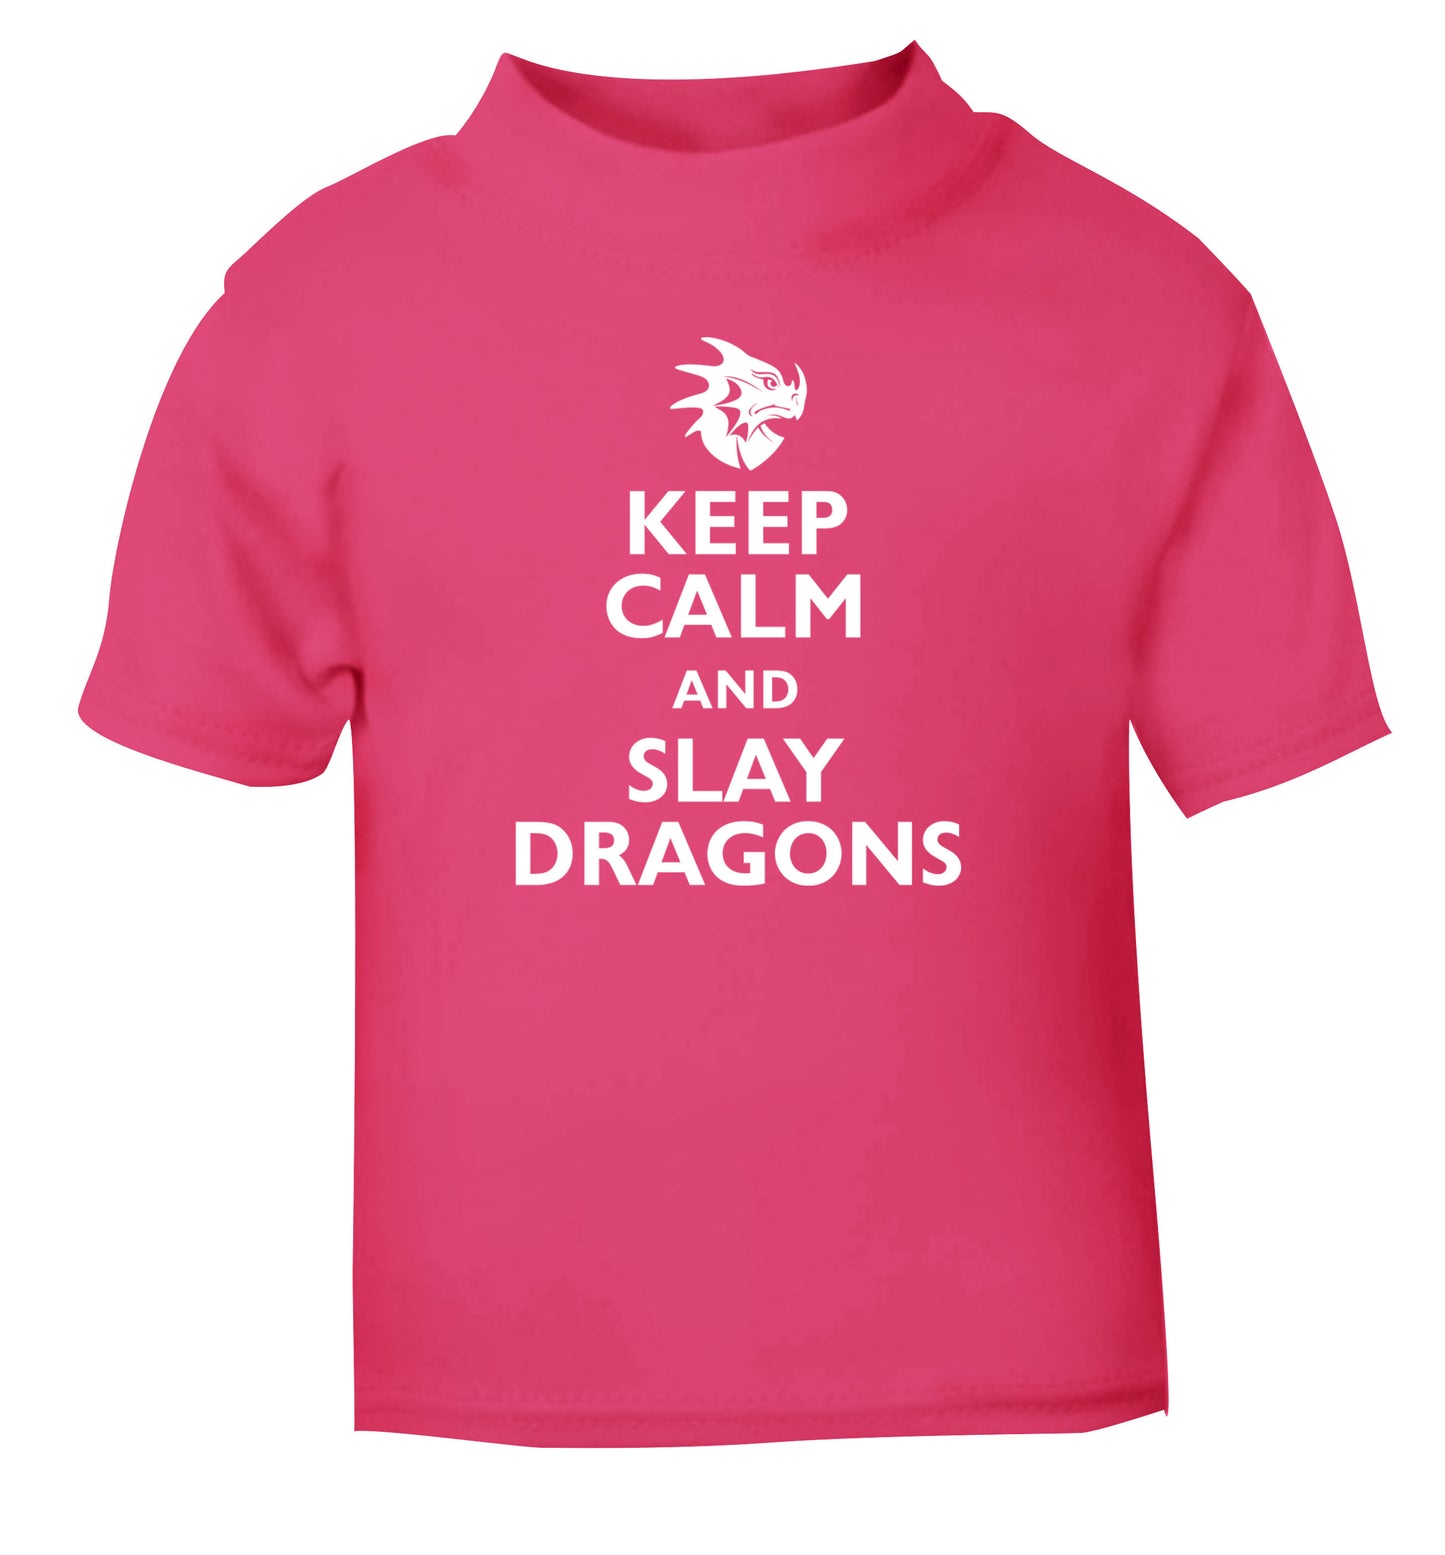 Keep calm and slay dragons pink Baby Toddler Tshirt 2 Years